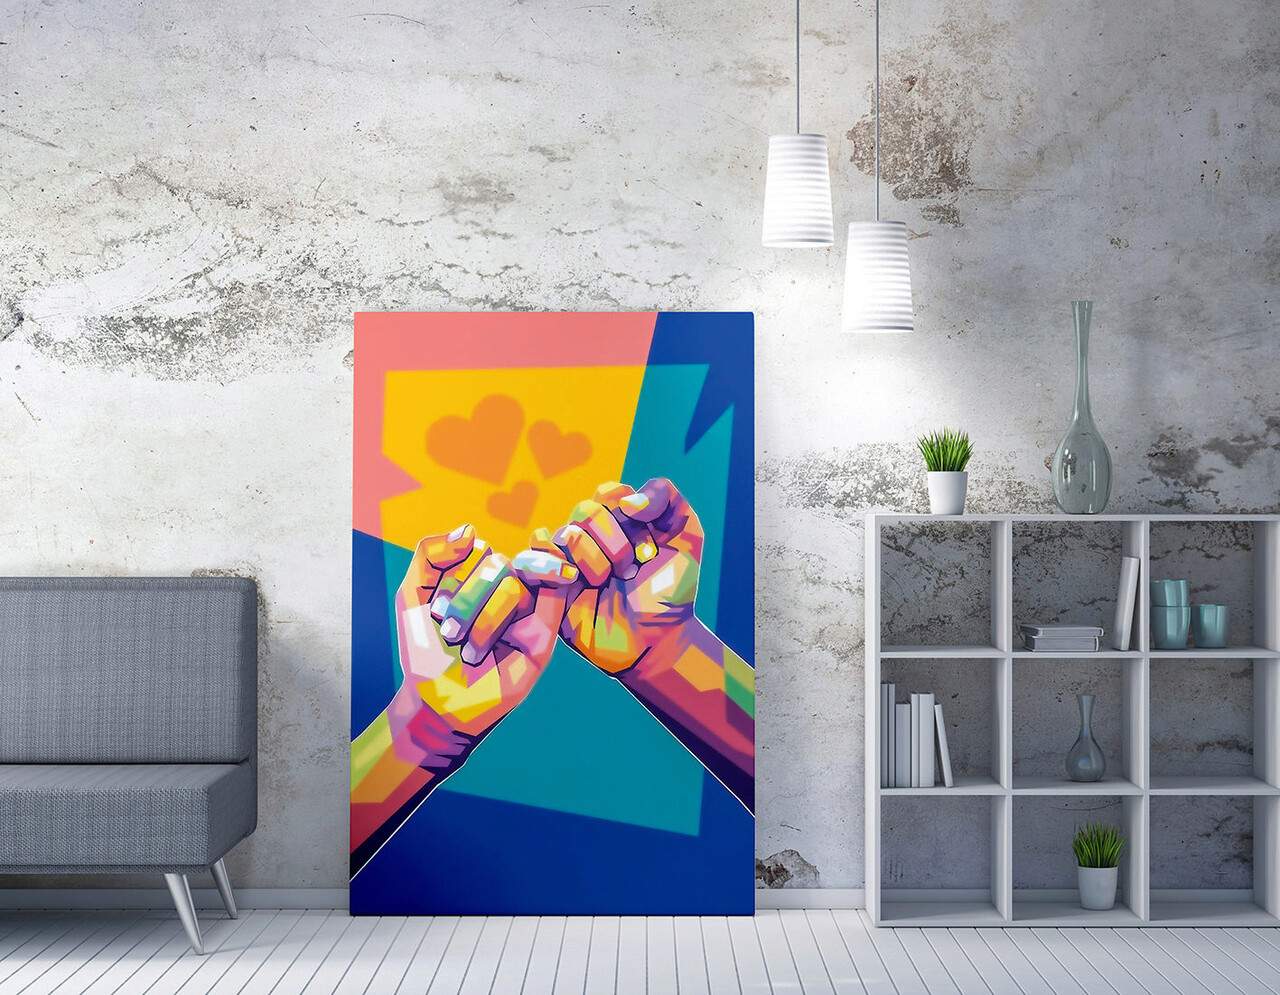 Tablou decorativ, WY201 (50 x 70), 50% bumbac / 50% poliester, Canvas imprimat, Multicolor